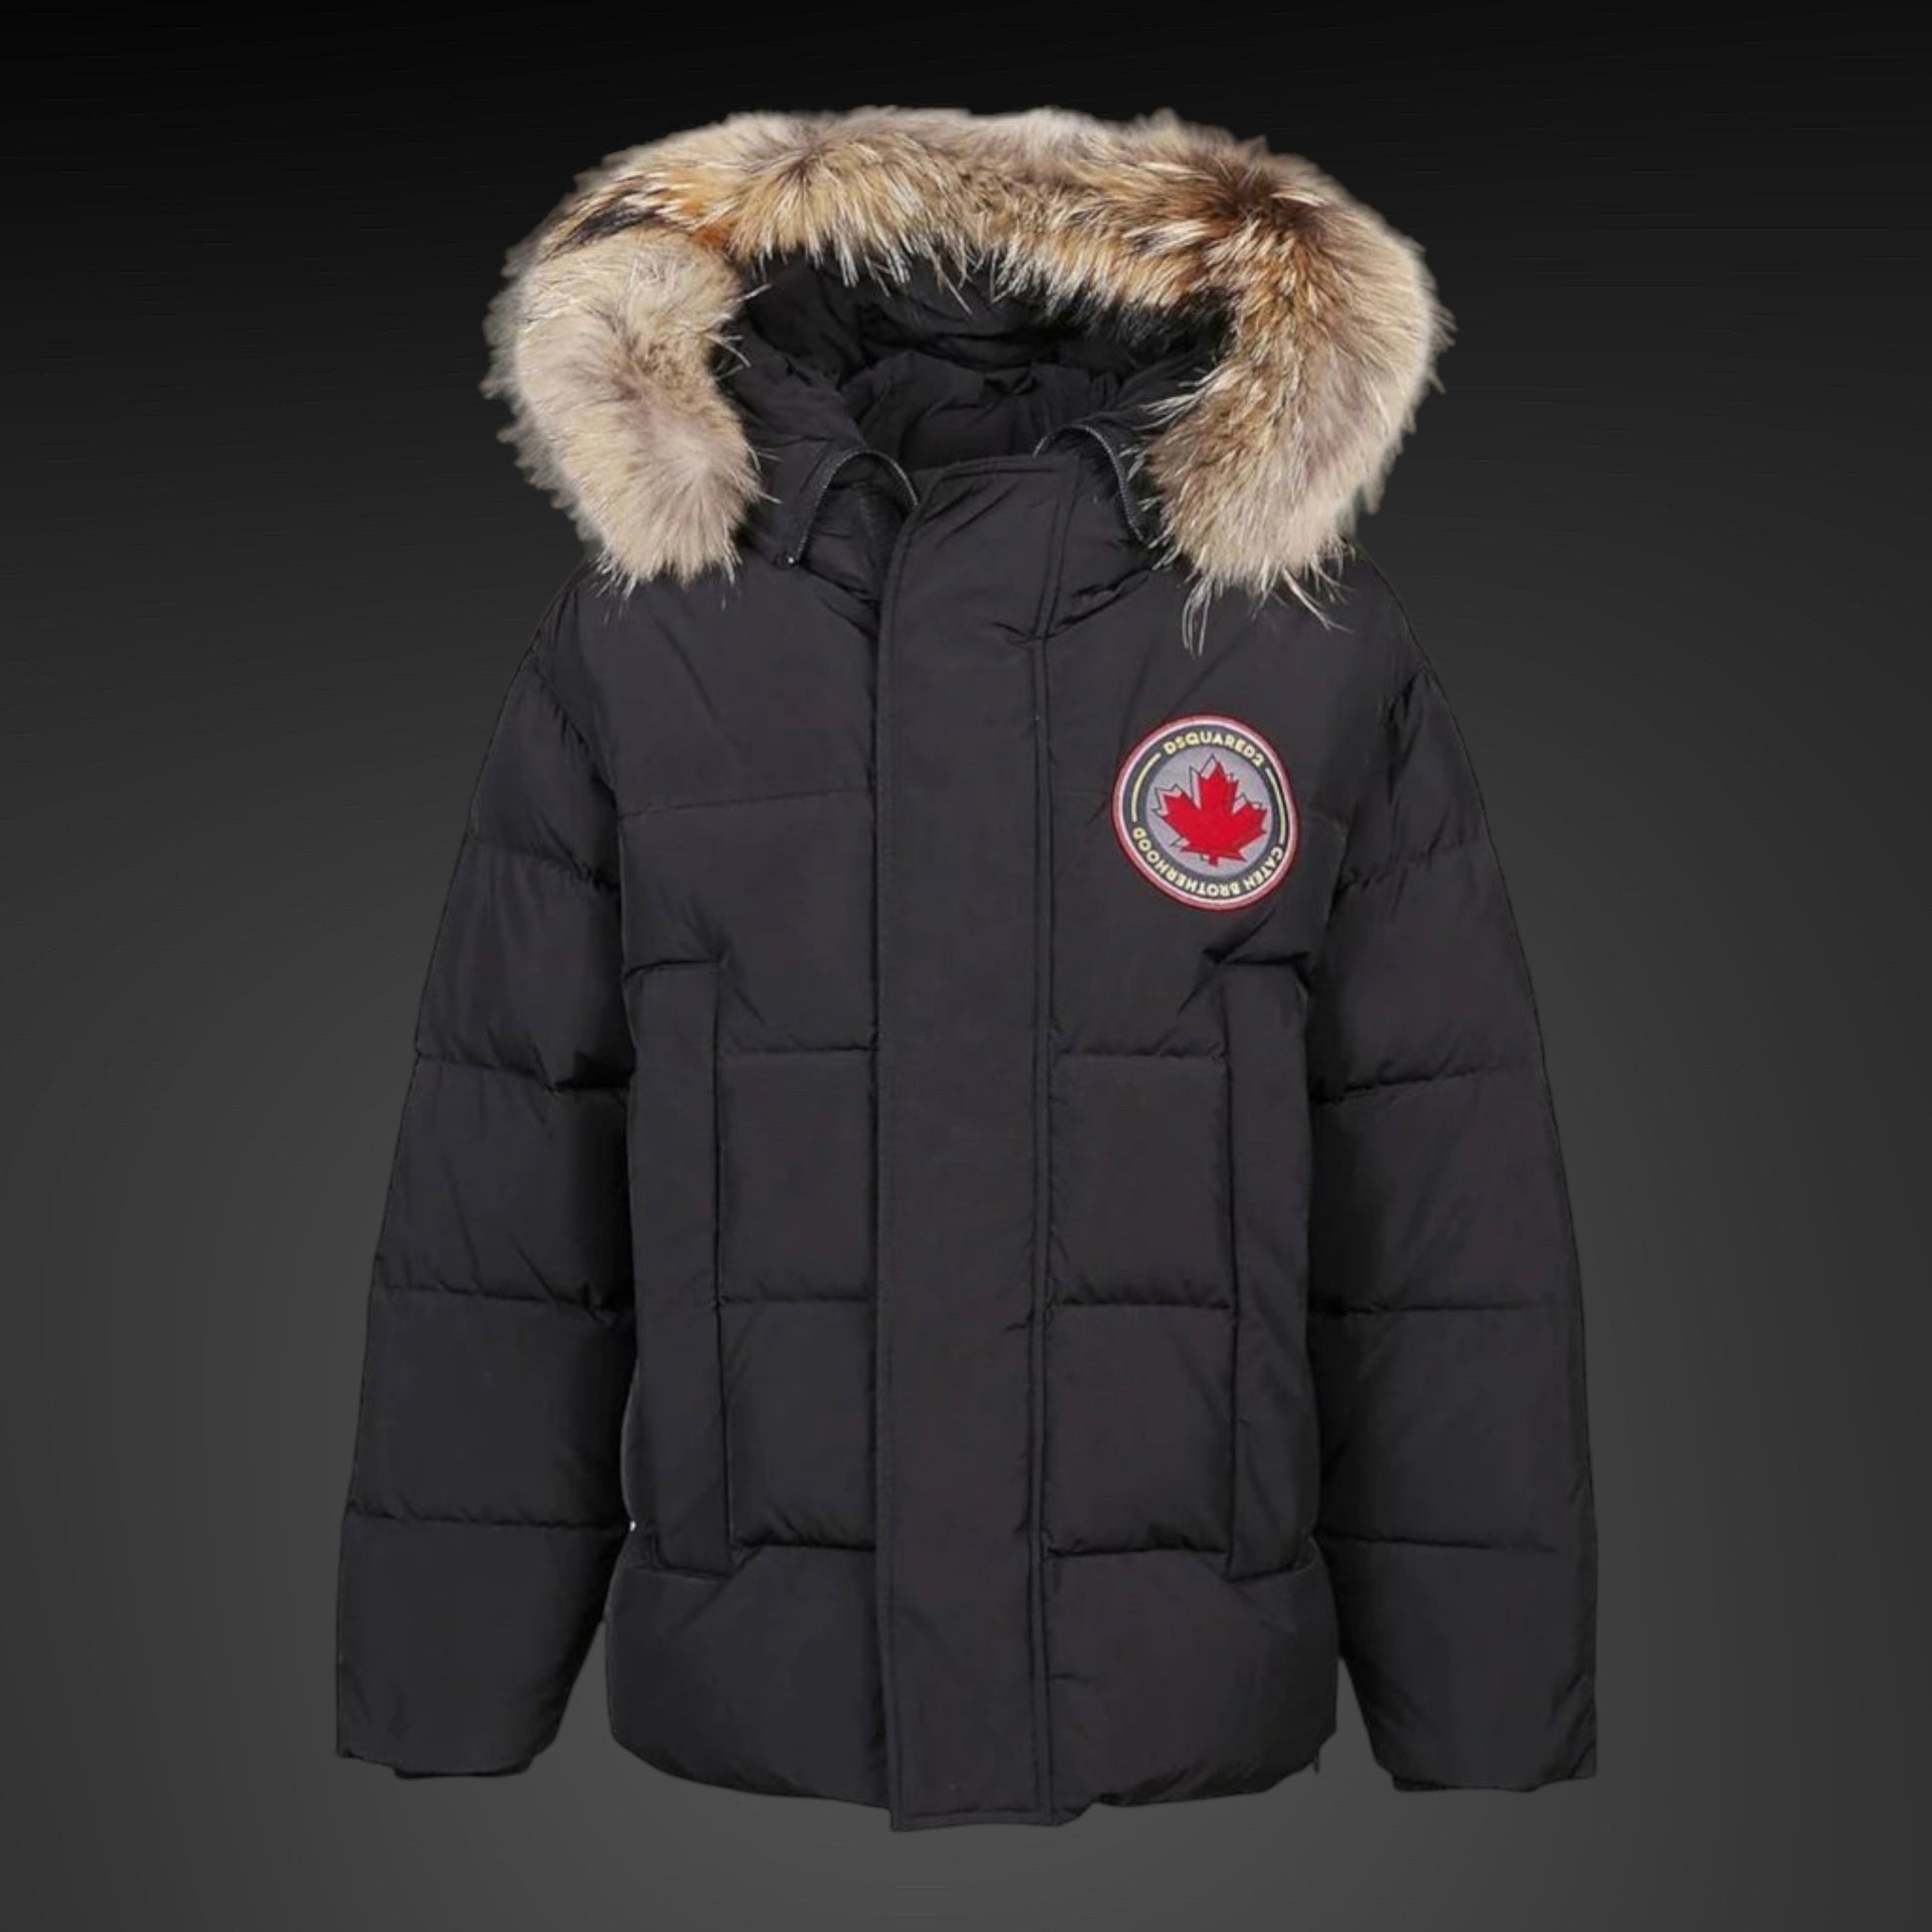 Ski Jacket - Black tech fabric down jacket